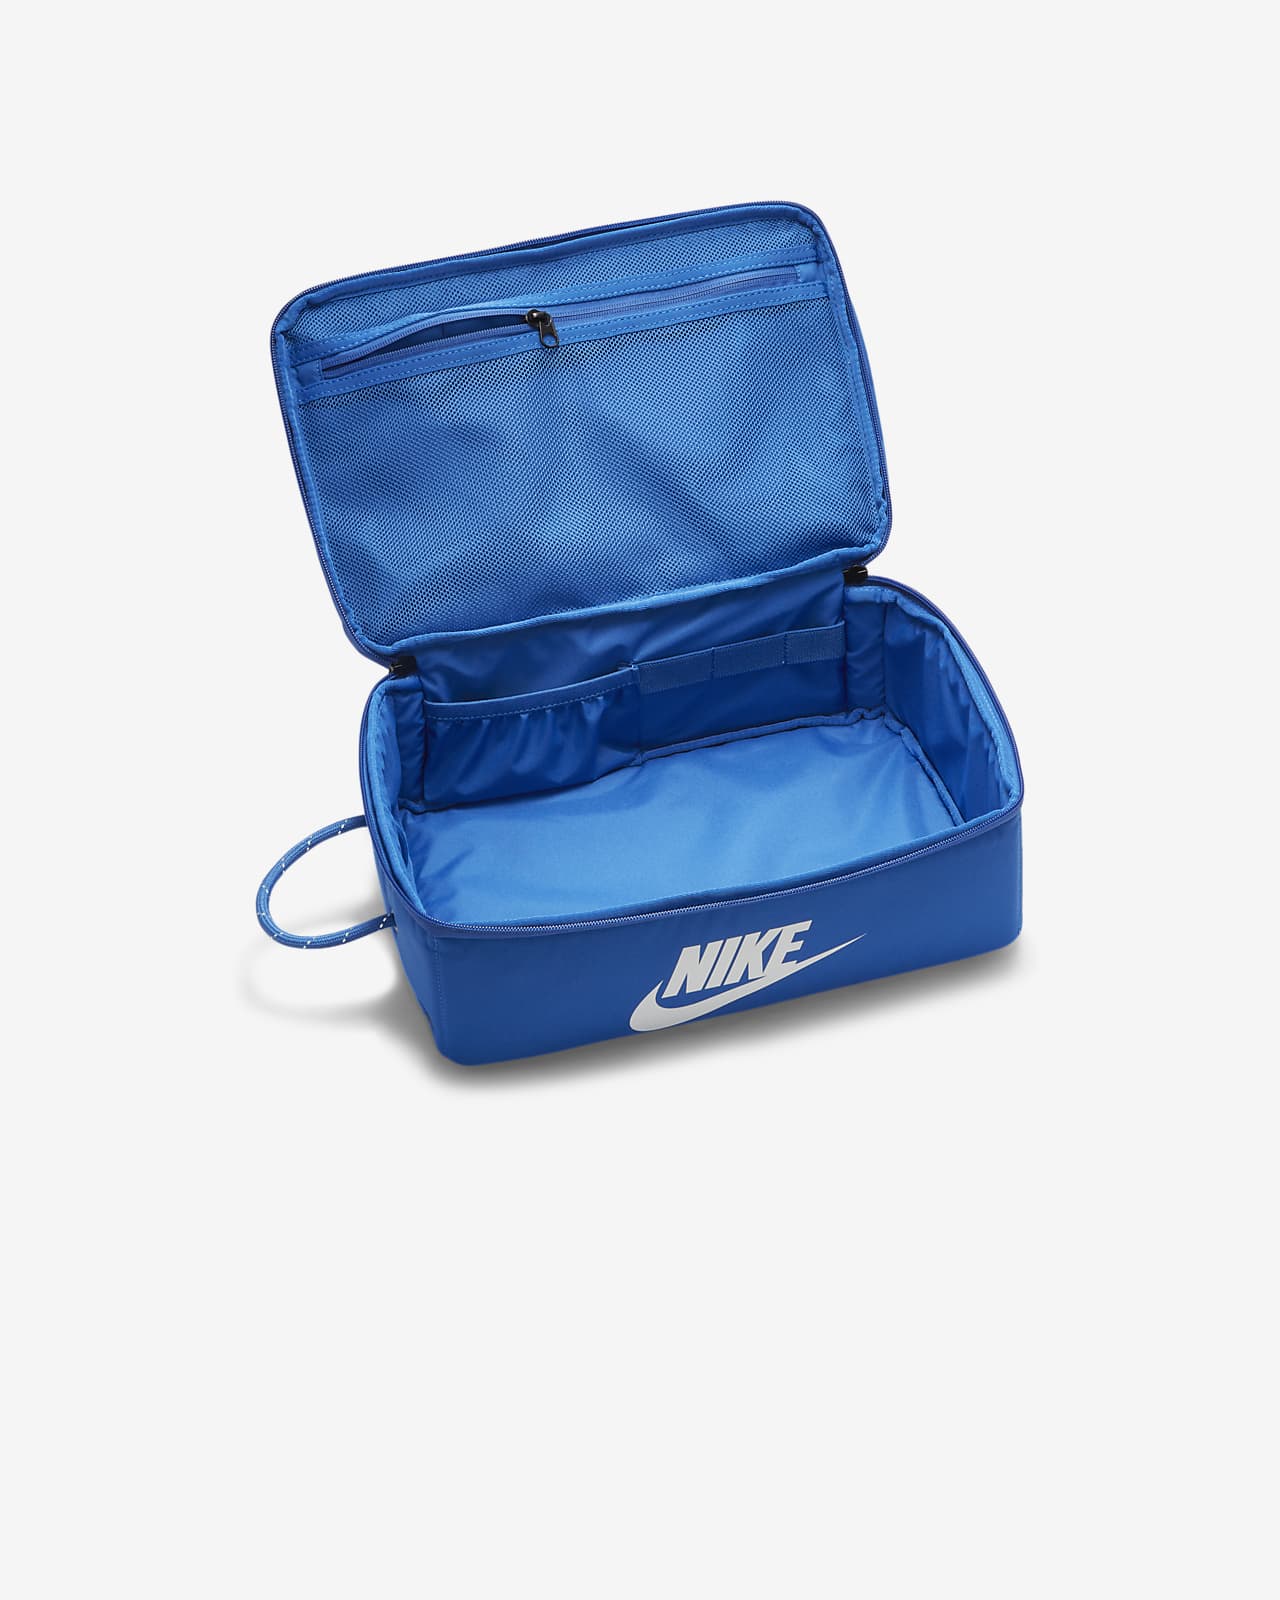 Intrepid Camp Gear - Shoe Bag Storage System